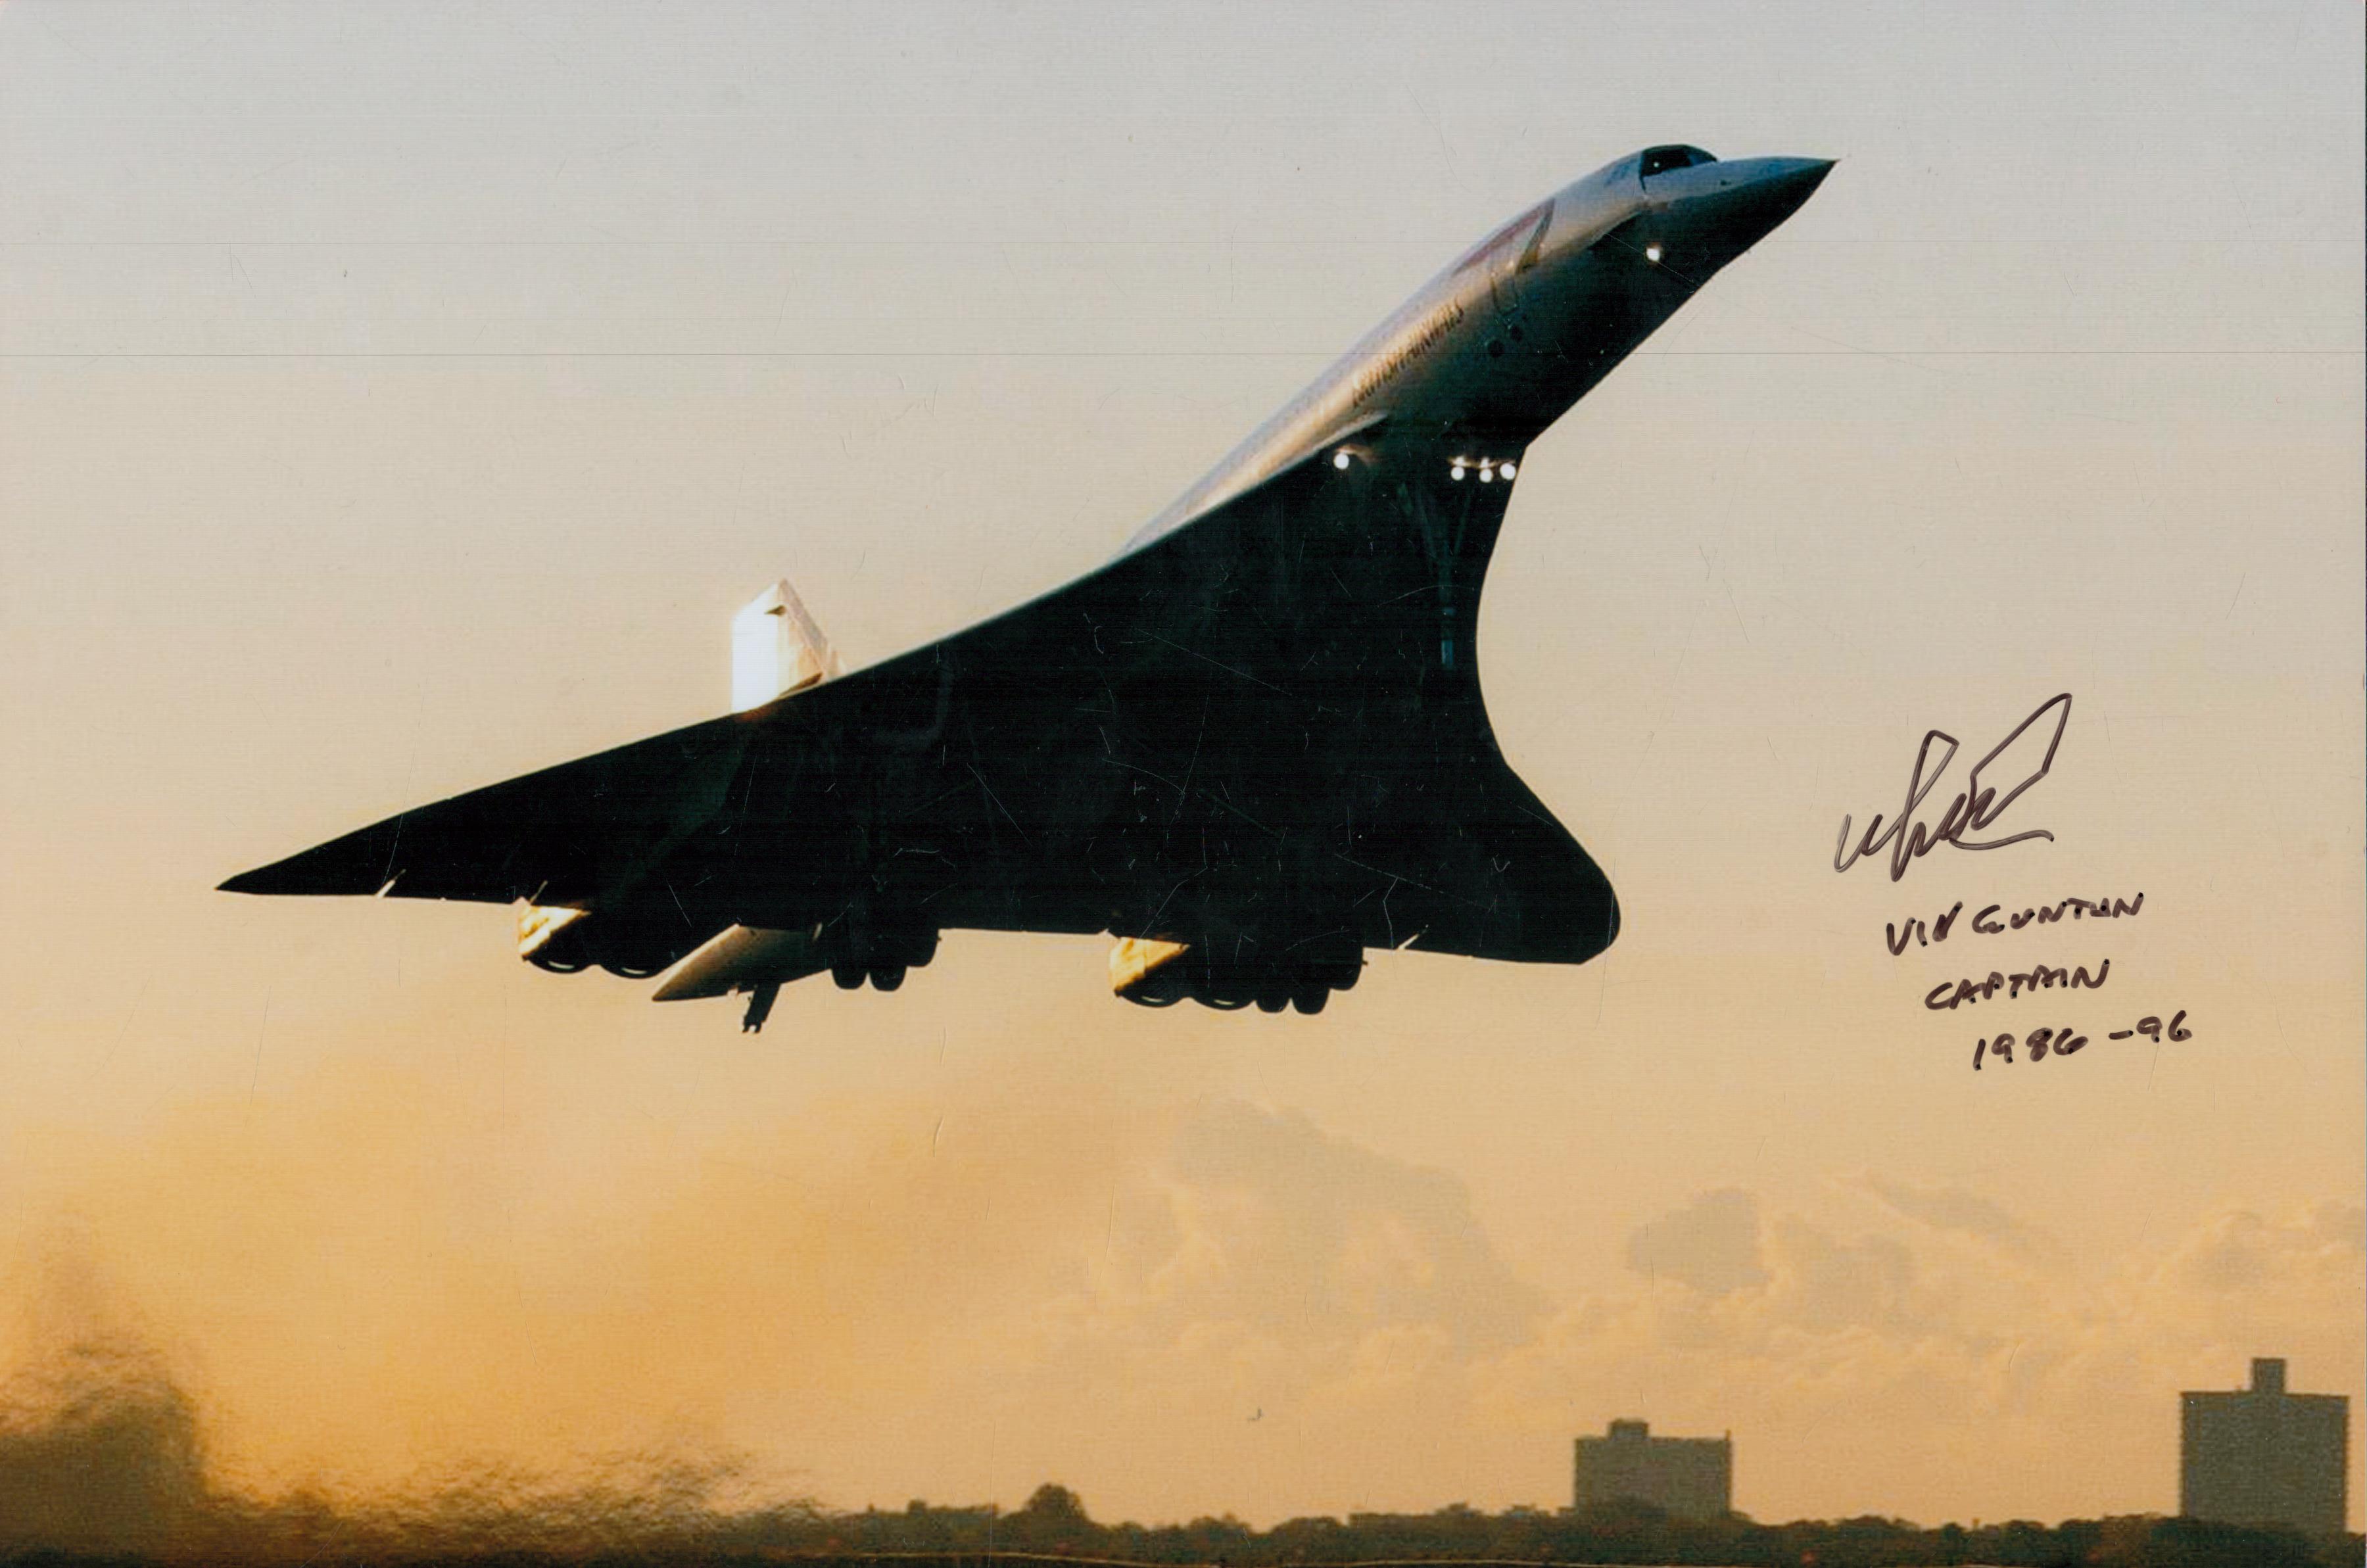 Concorde three 12 x 8 inch colour photos signed by Capt Jock Lowe, Capt Viv Gunton and Captain - Image 2 of 2